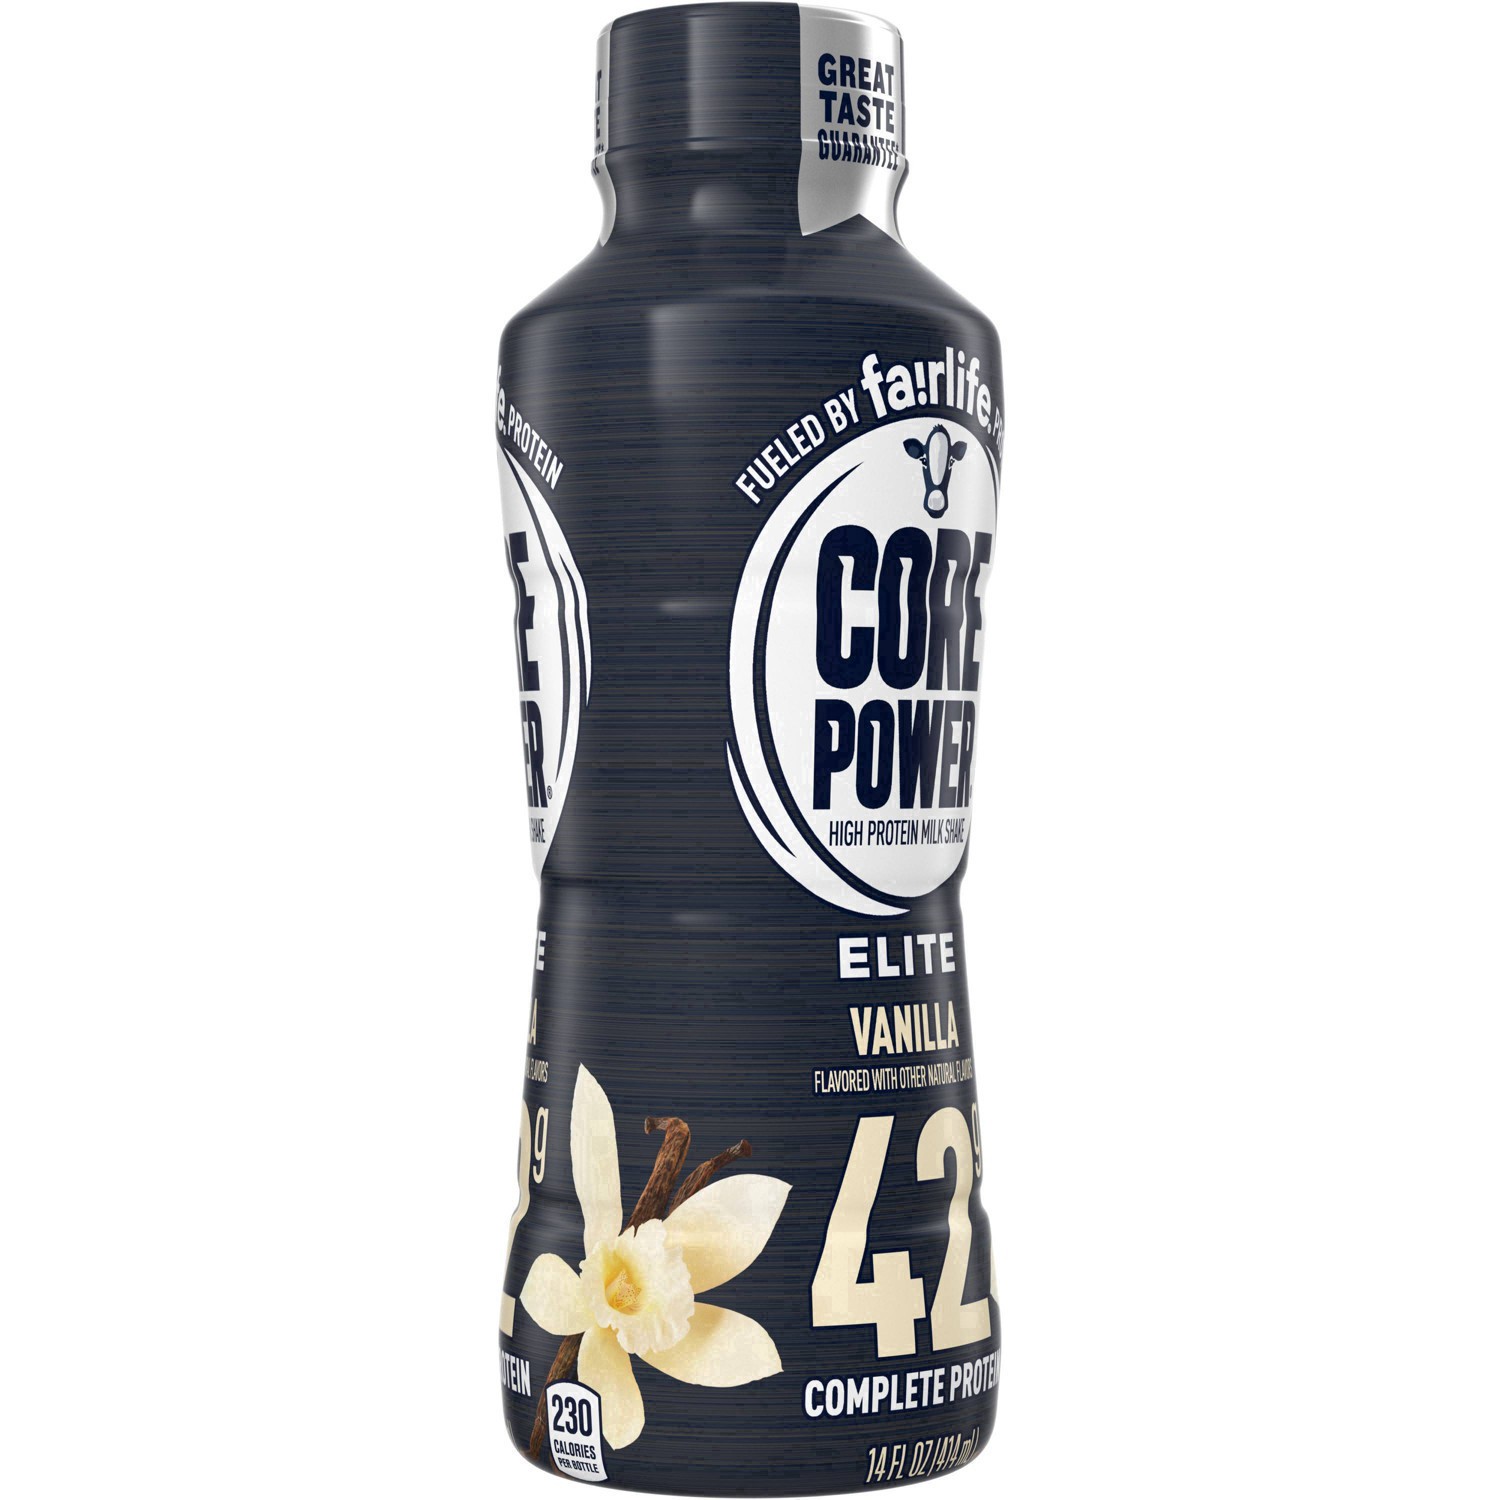 slide 18 of 78, Core Power High Protein Elite Vanilla Milk Shake 14 fl oz, 14 fl oz